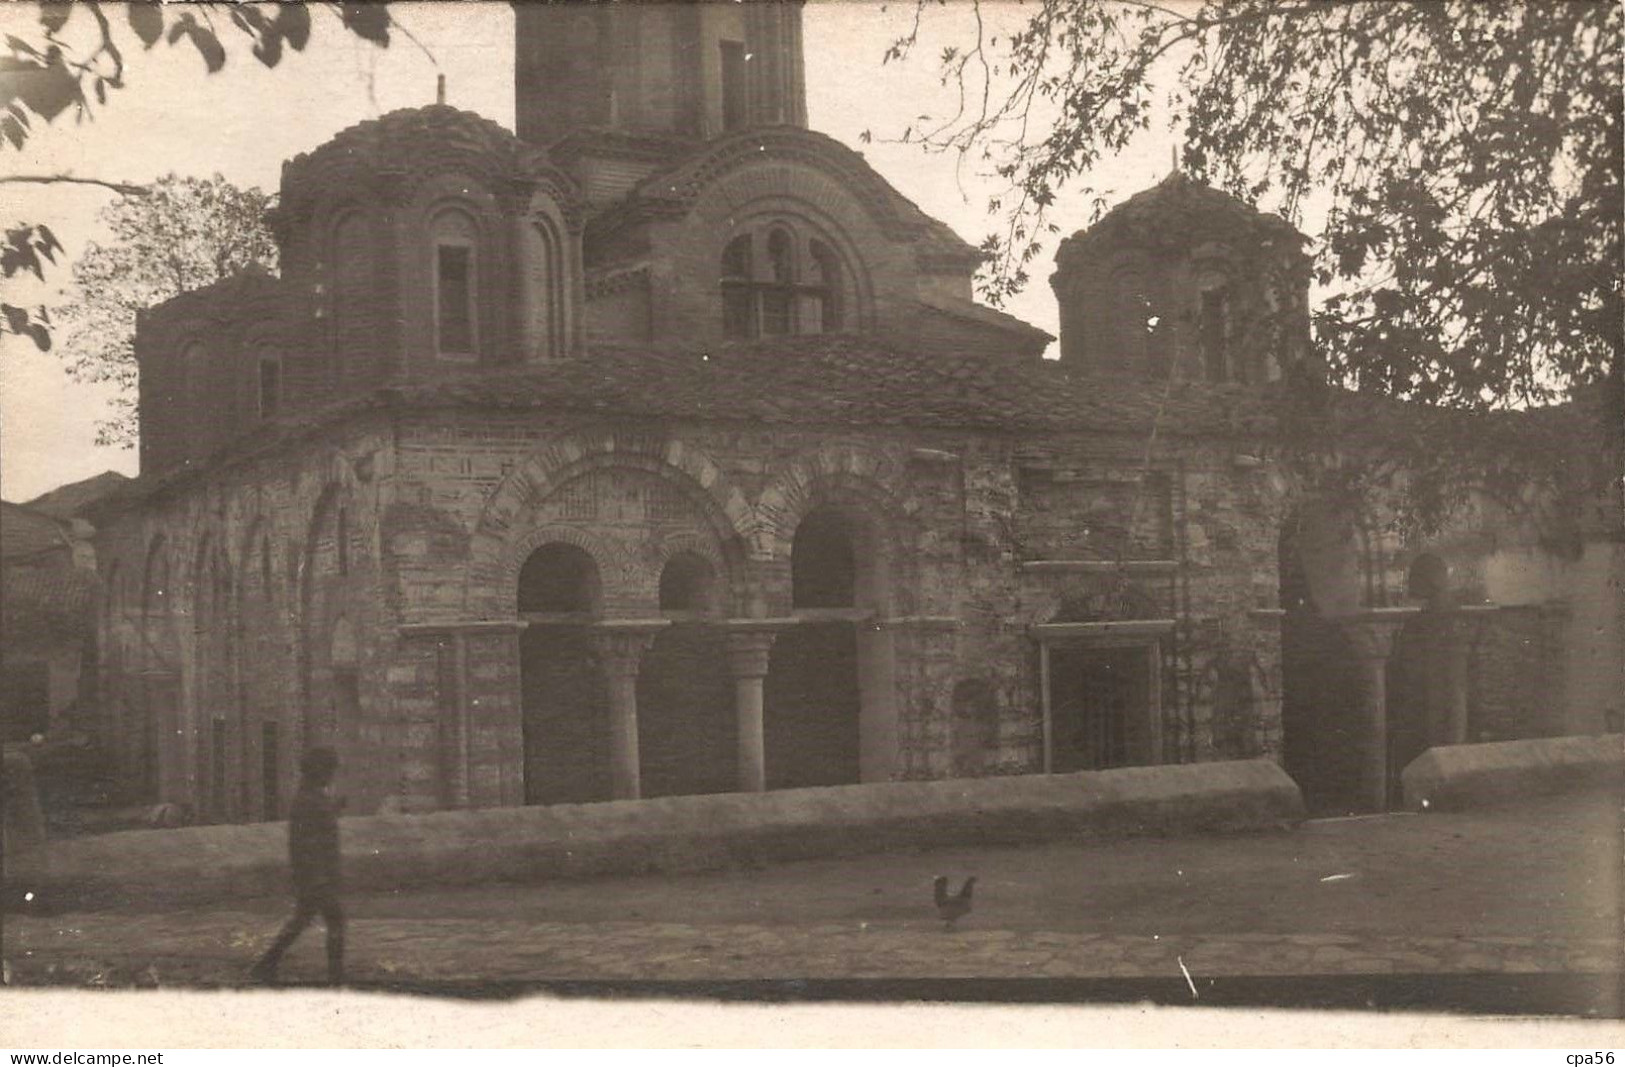 SALONICA 1917 - PHOTO CARD - Church ? - Grecia